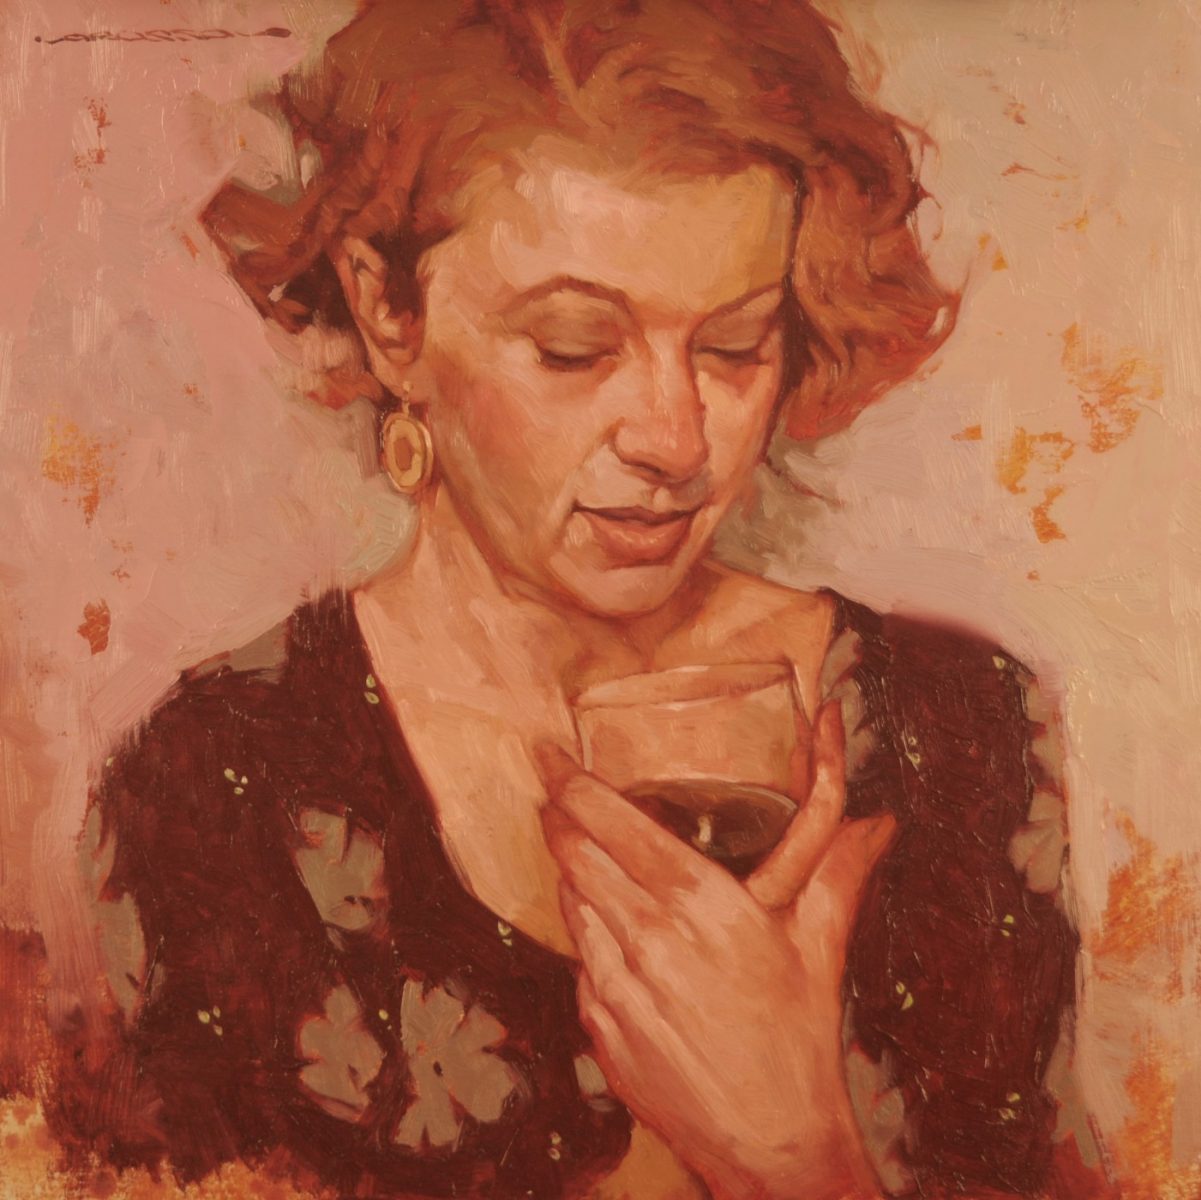 Portrait of redhead holding wine glass by Joseph Lorusso